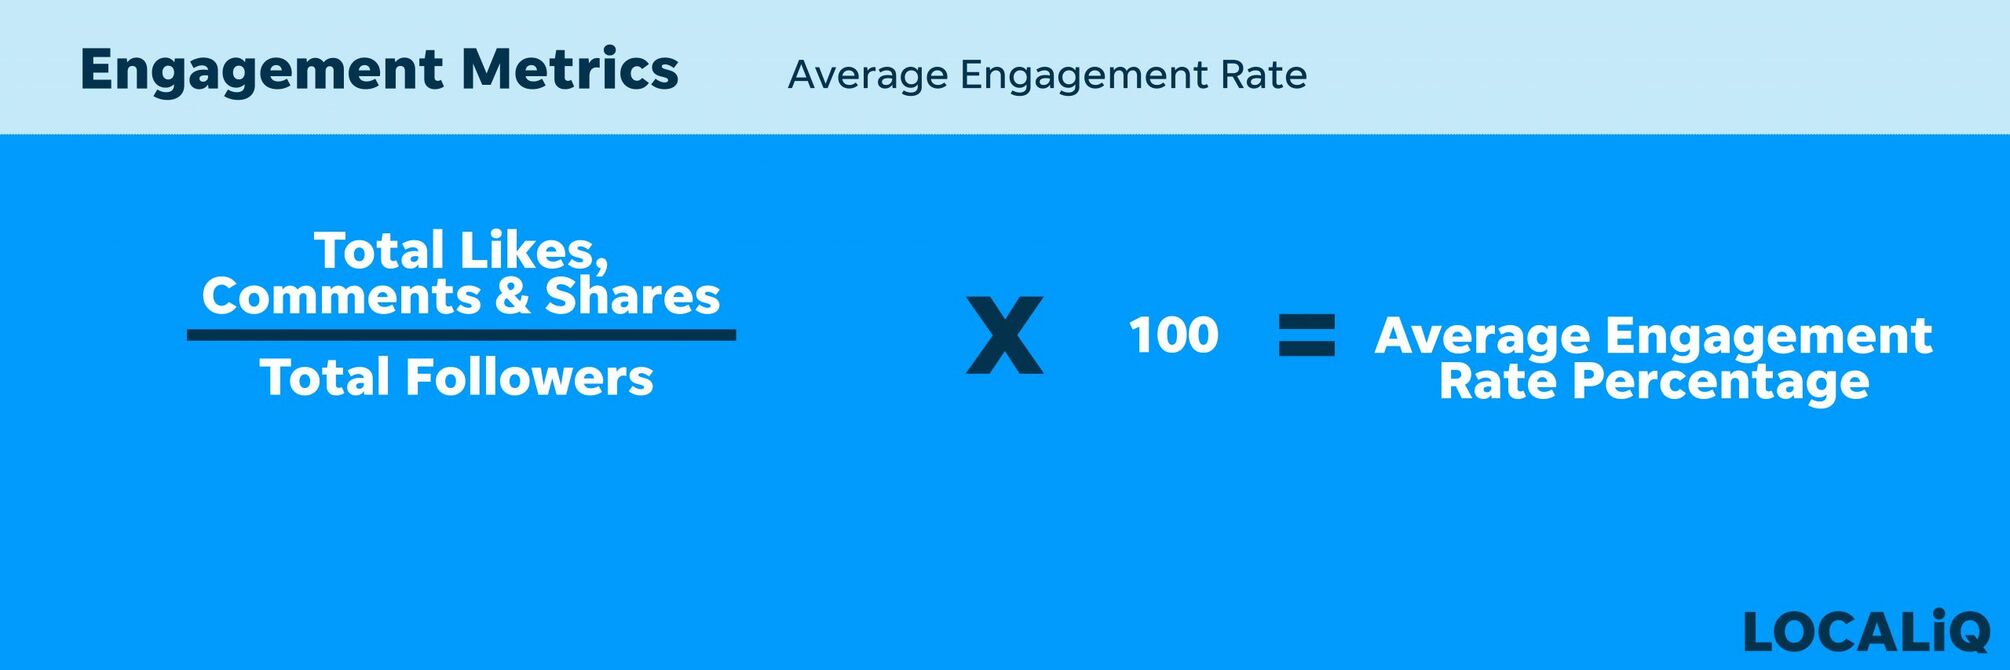 Engagement Metrics| Average Engagement Rate.